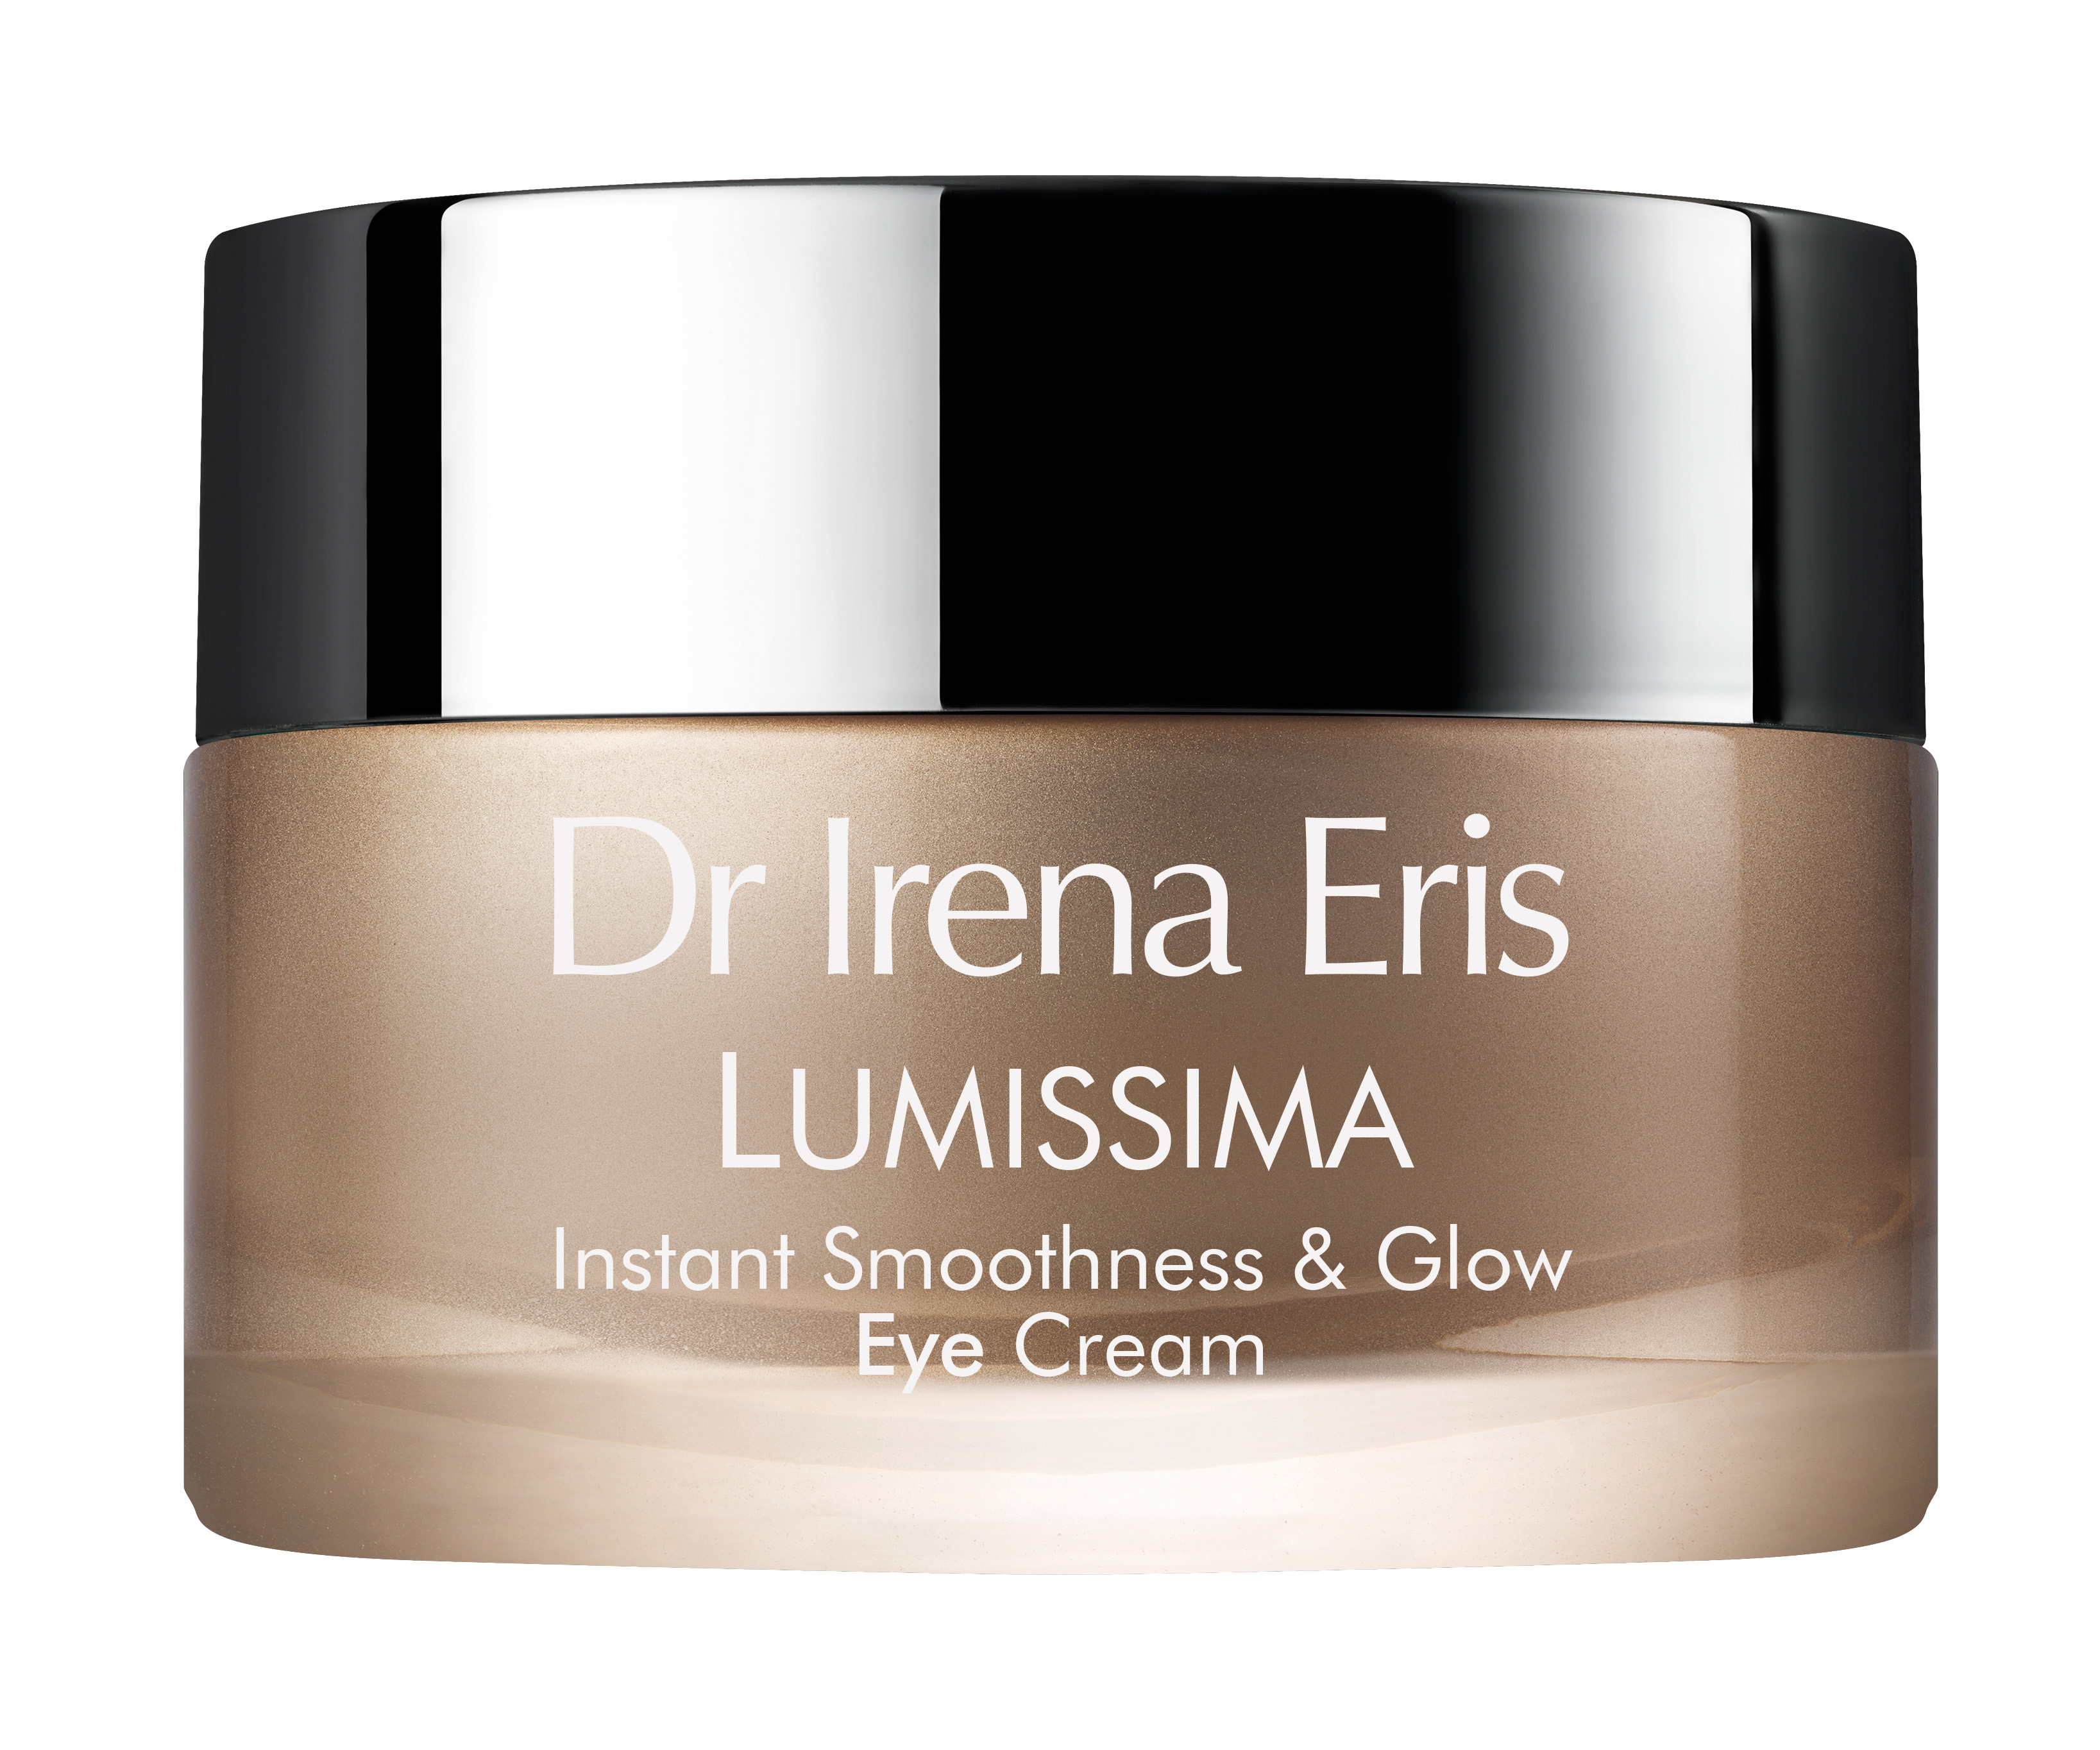 Lumissima Instant Smoothness & Glow Eye Cream